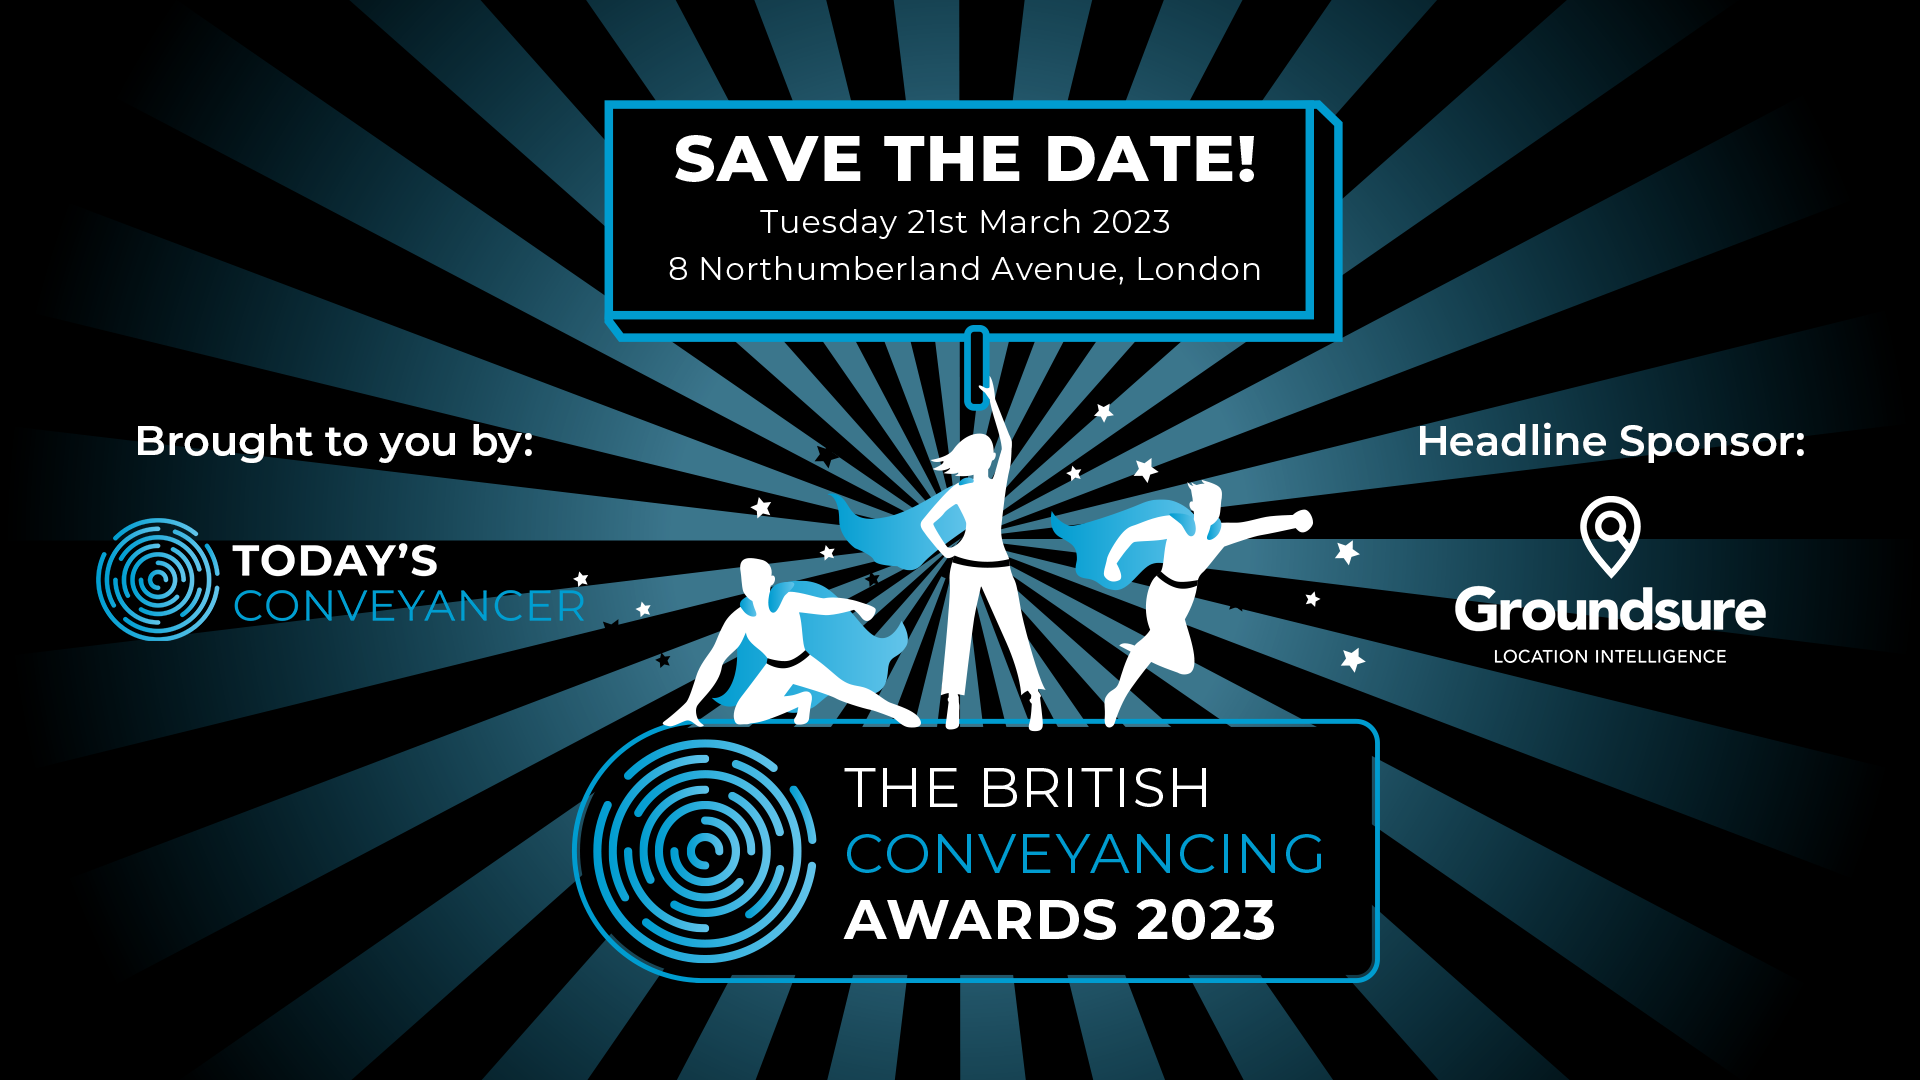 The British Conveyancing Awards 2023